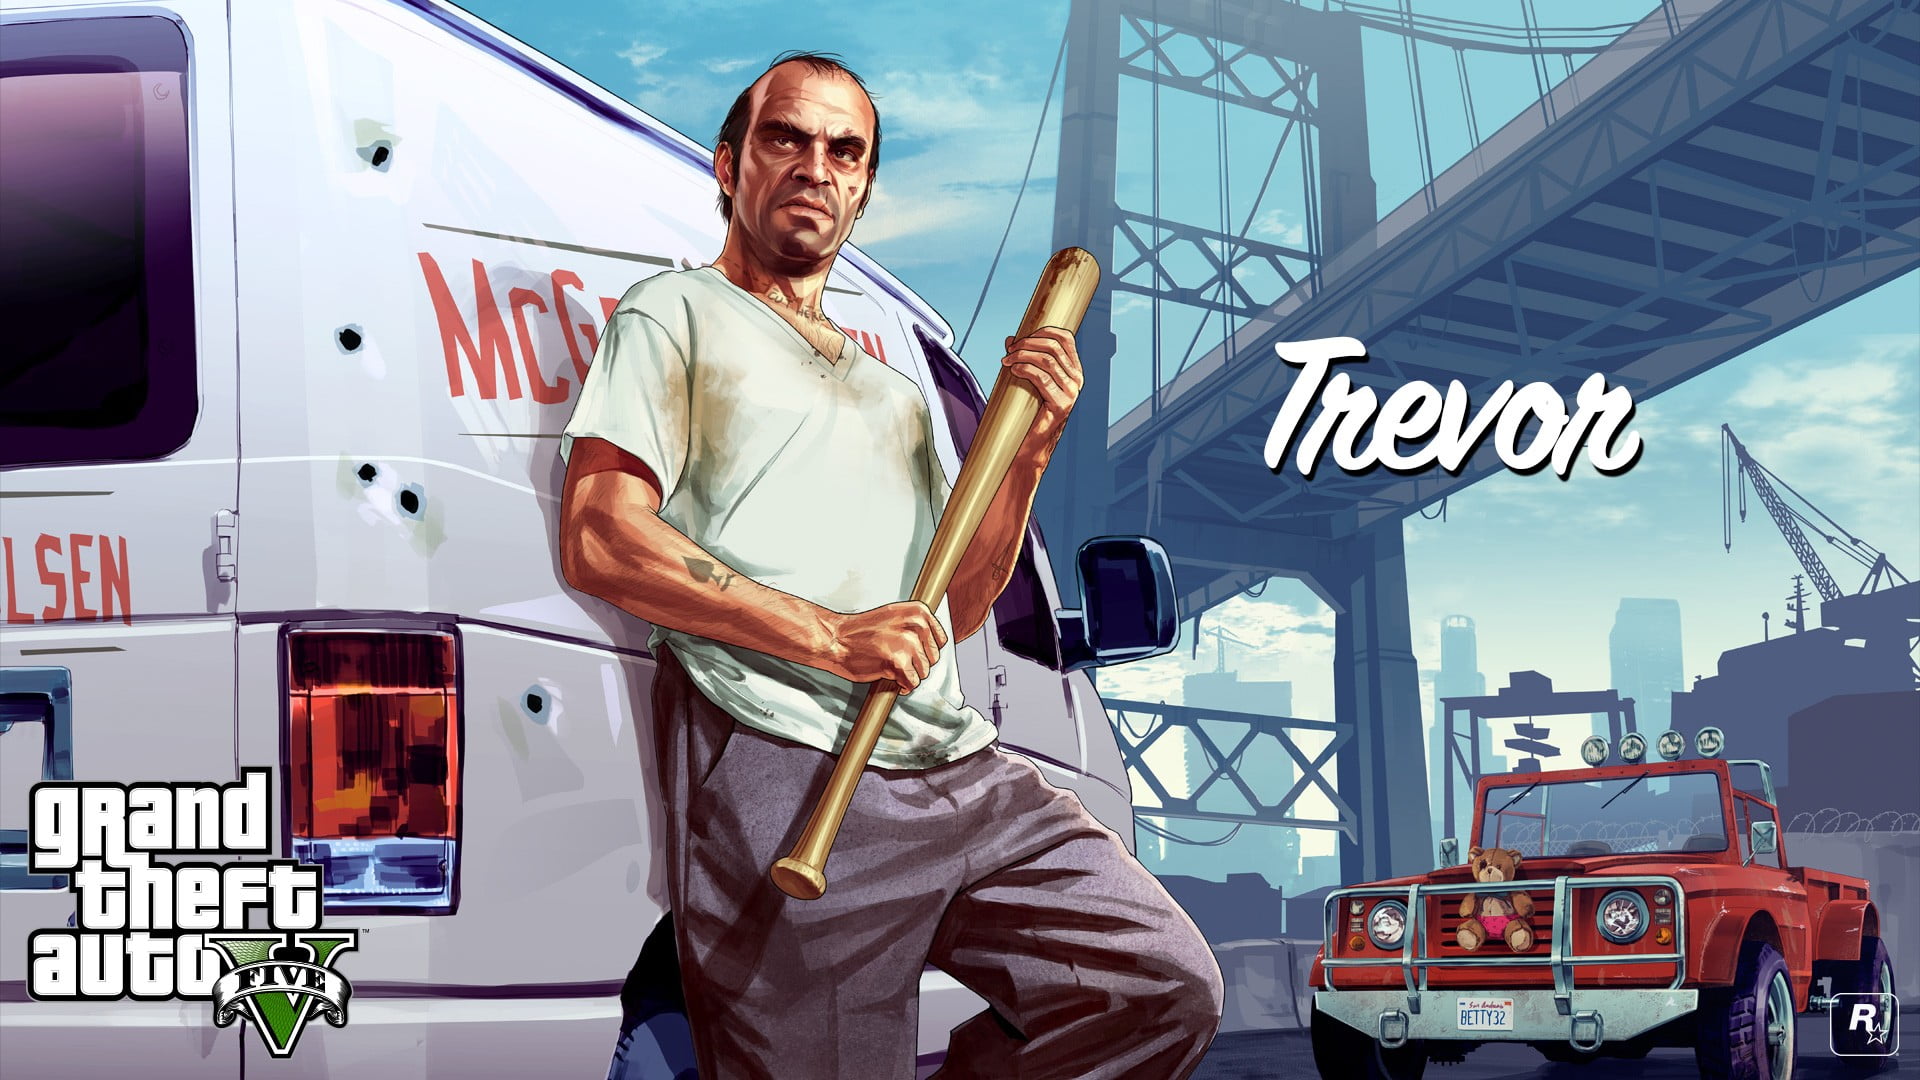 Grand Theft Auto Five Trevon digital wallpaper, Grand Theft Auto V, Rockstar Games, video game characters